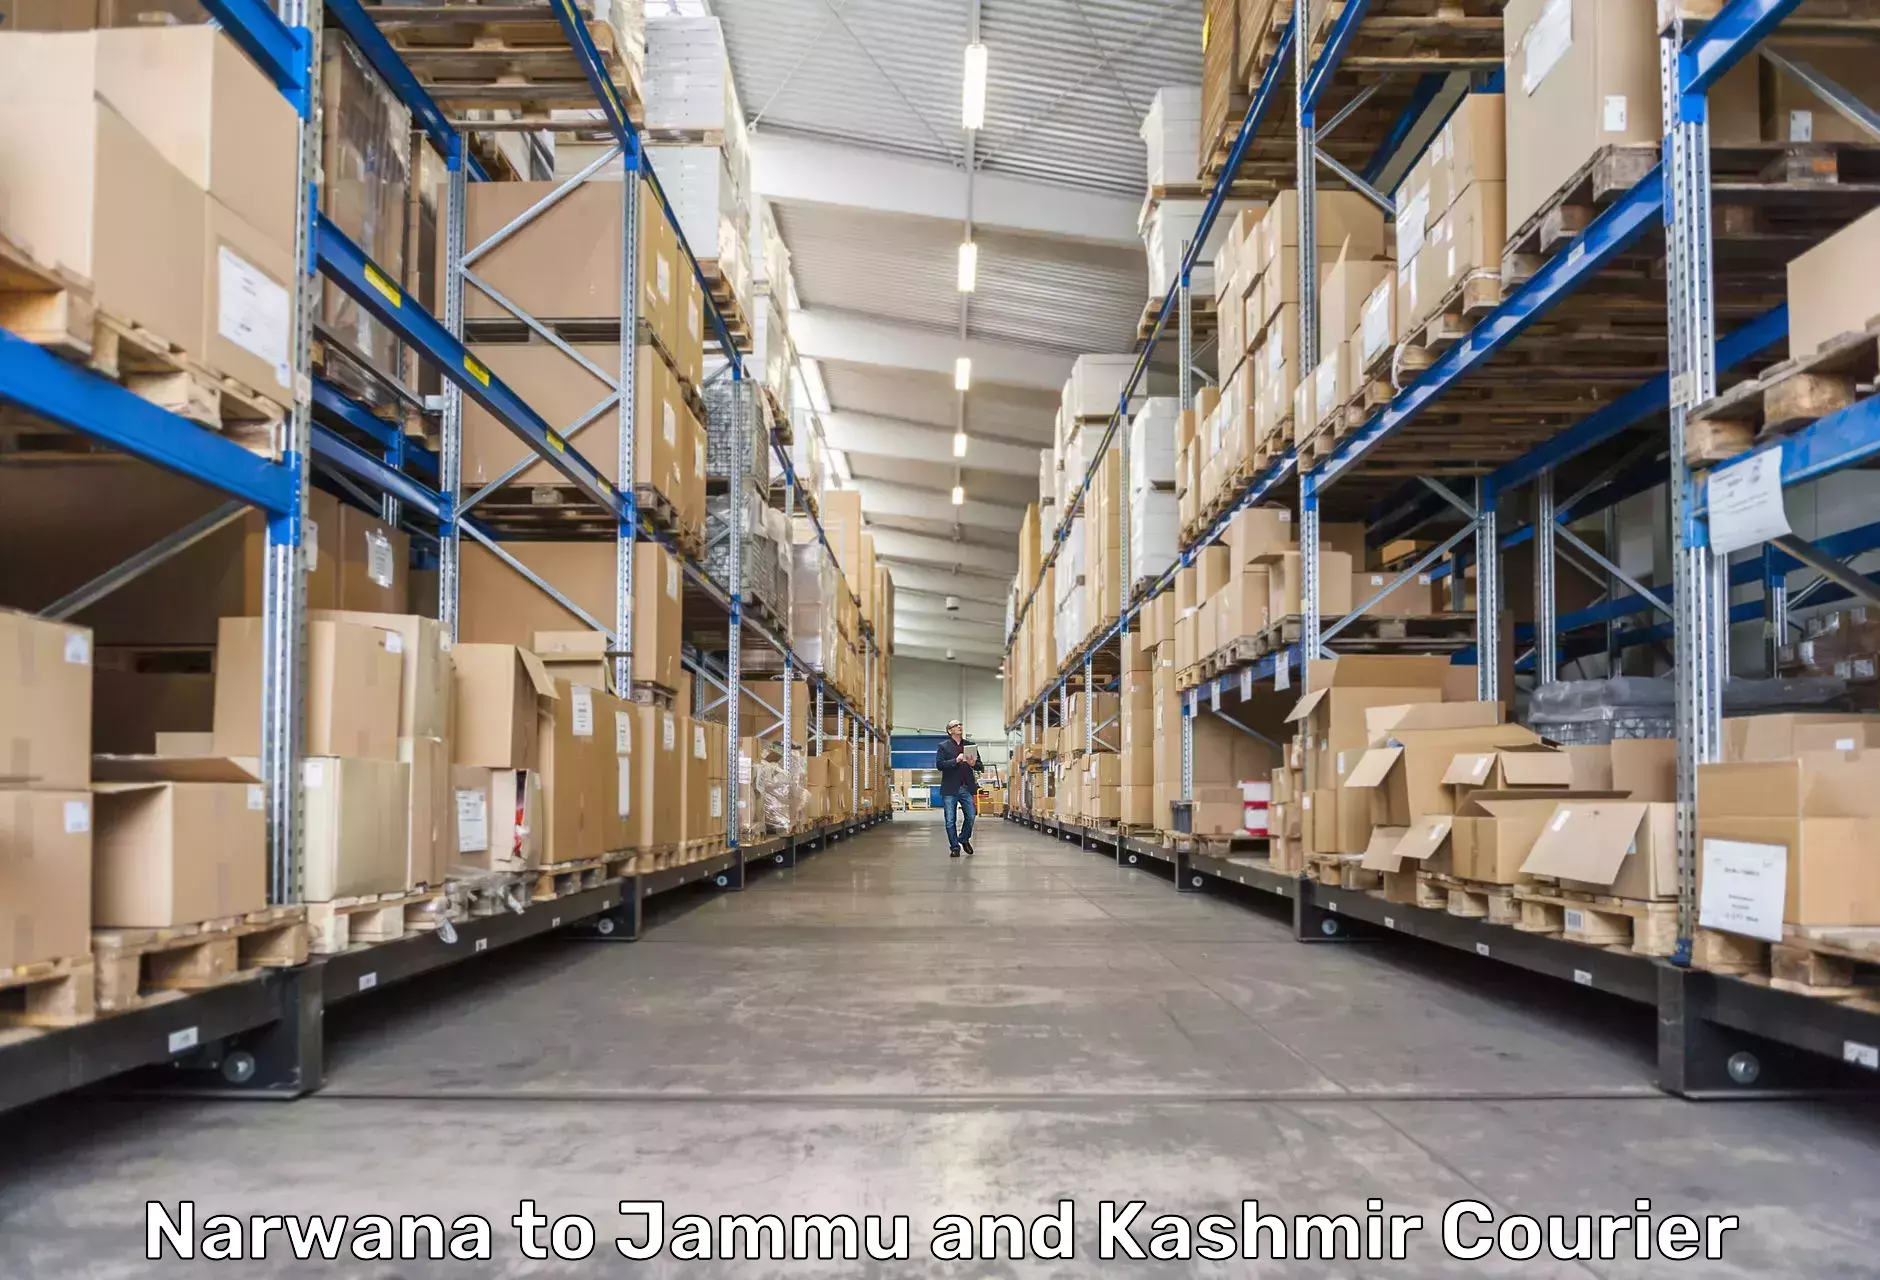 Courier service comparison Narwana to Jammu and Kashmir